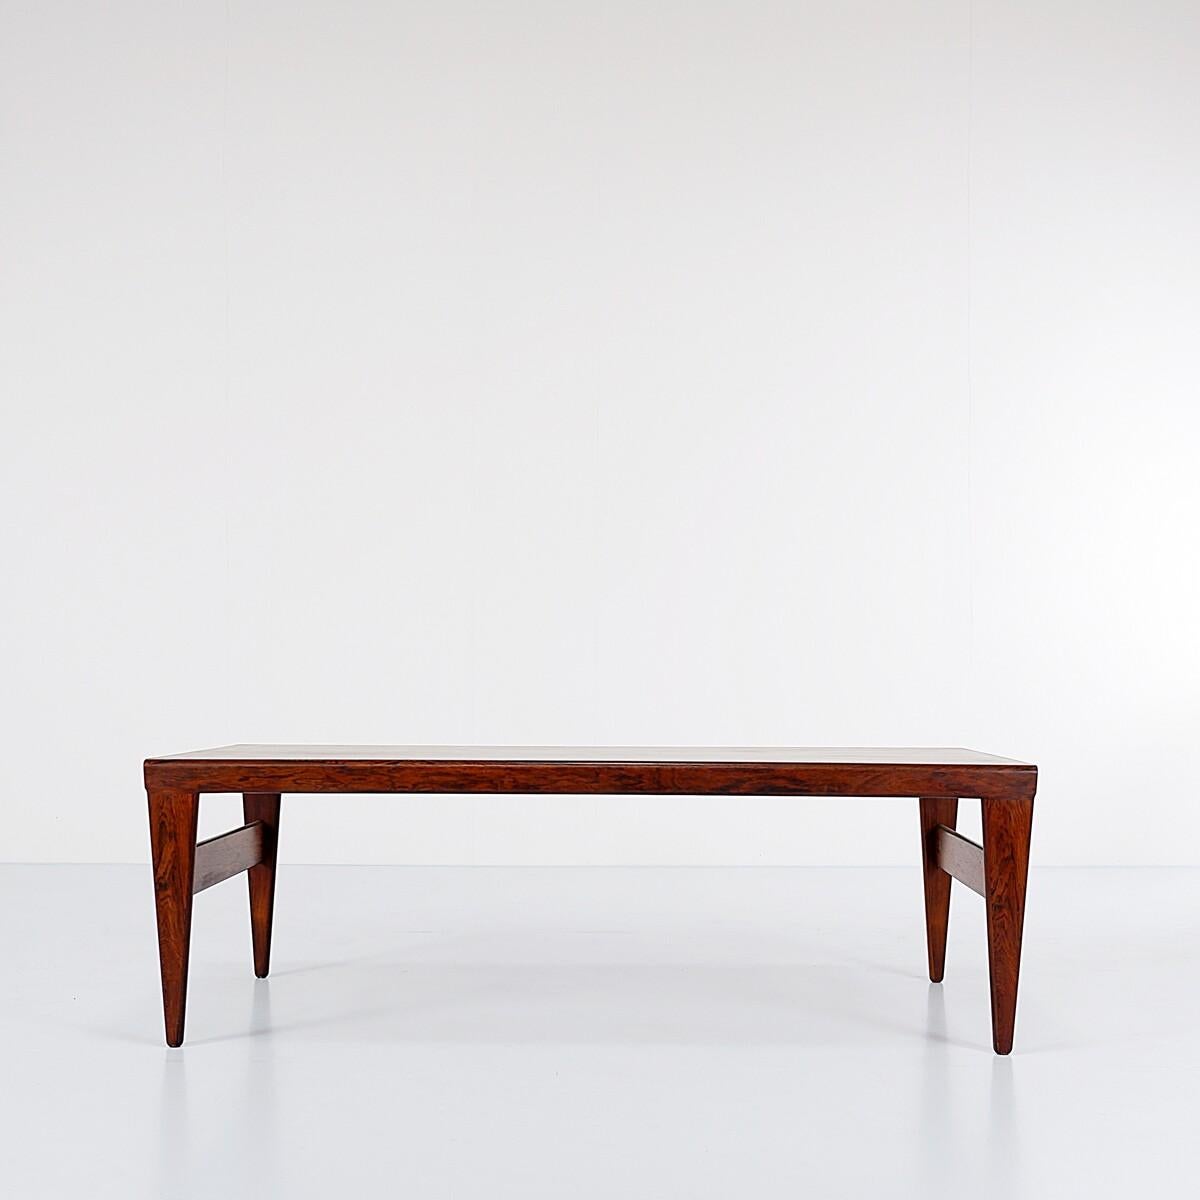 Table basse moderne du milieu du siècle par Illum Wikkelso, mobelfabrik de Koefoed